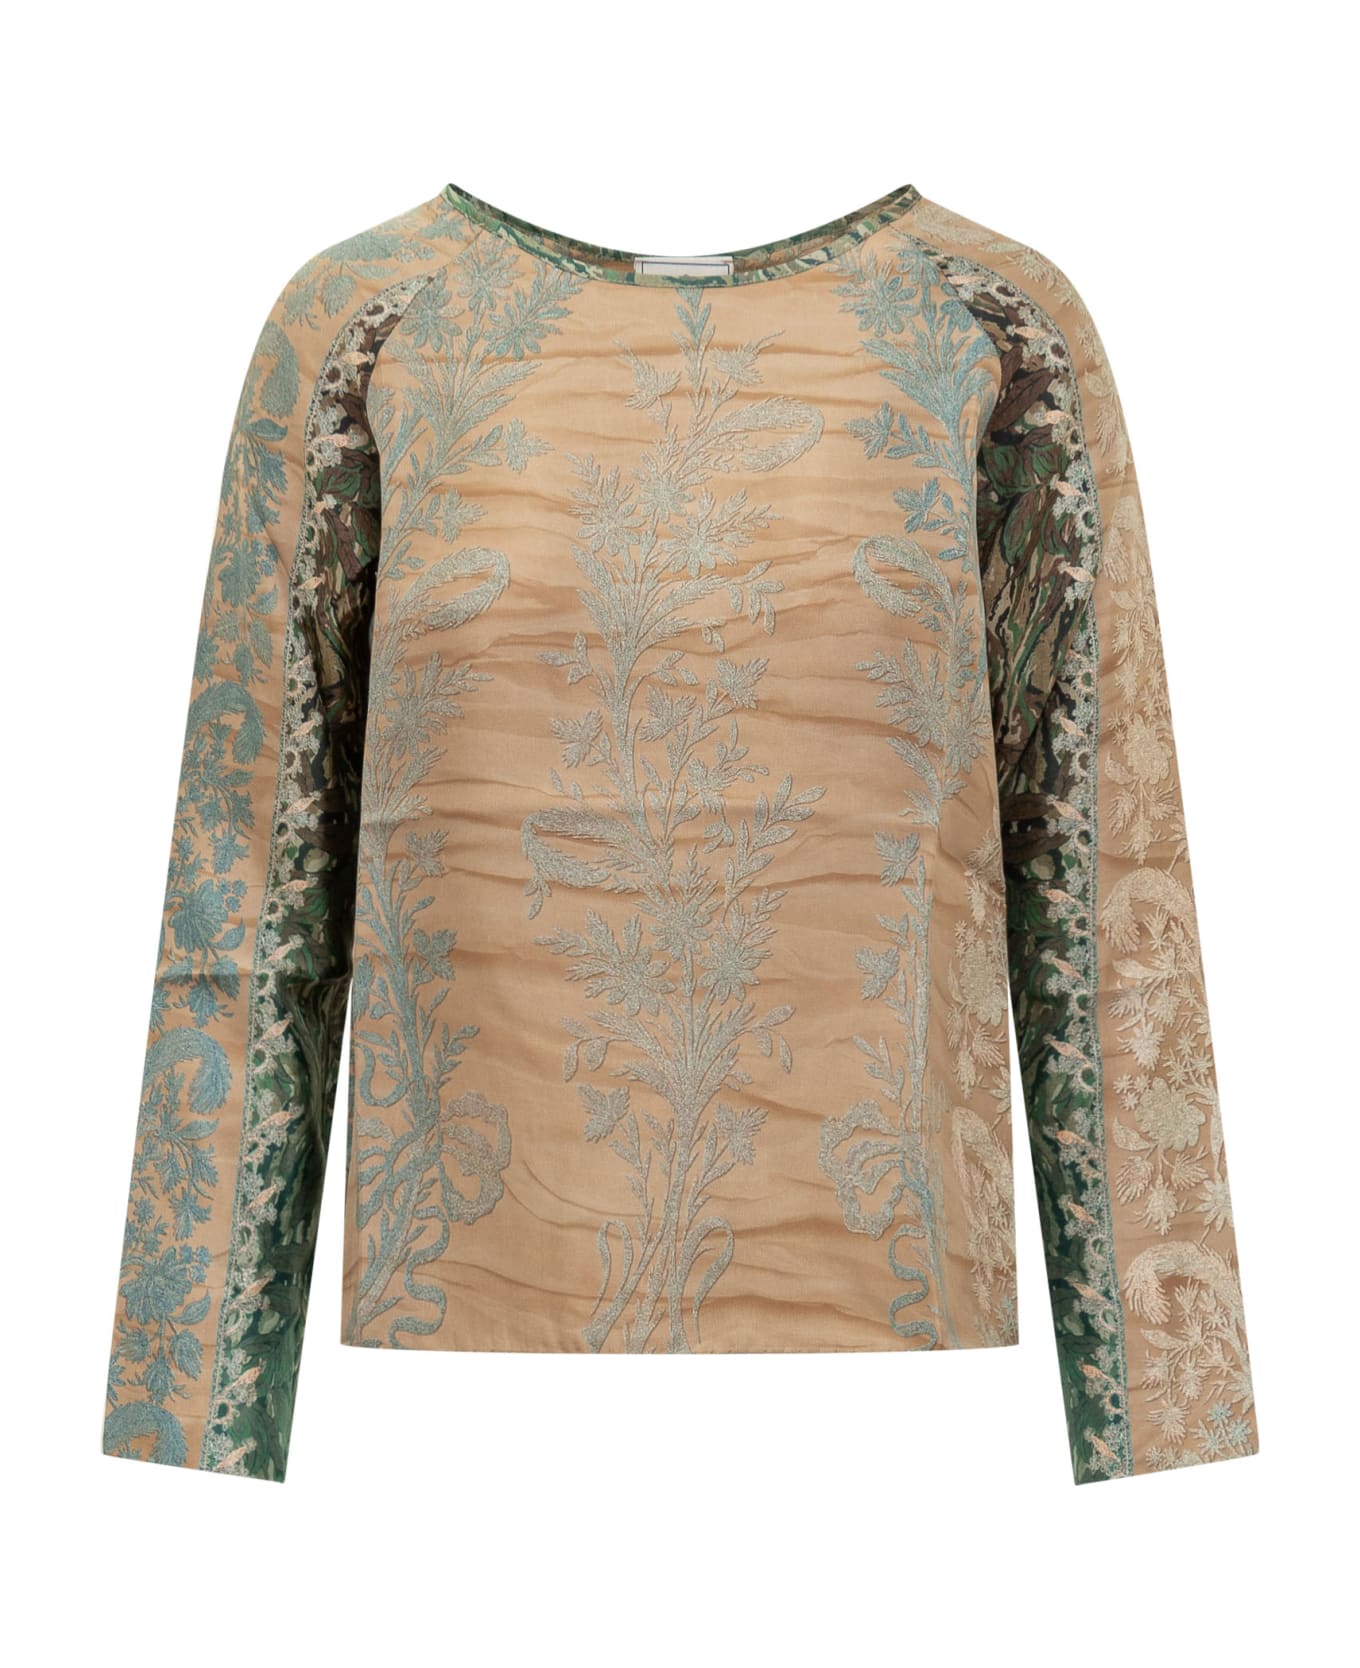 Pierre-Louis Mascia Silk Blouse With Floral Pattern - CIPRIA AZZURRO Tシャツ